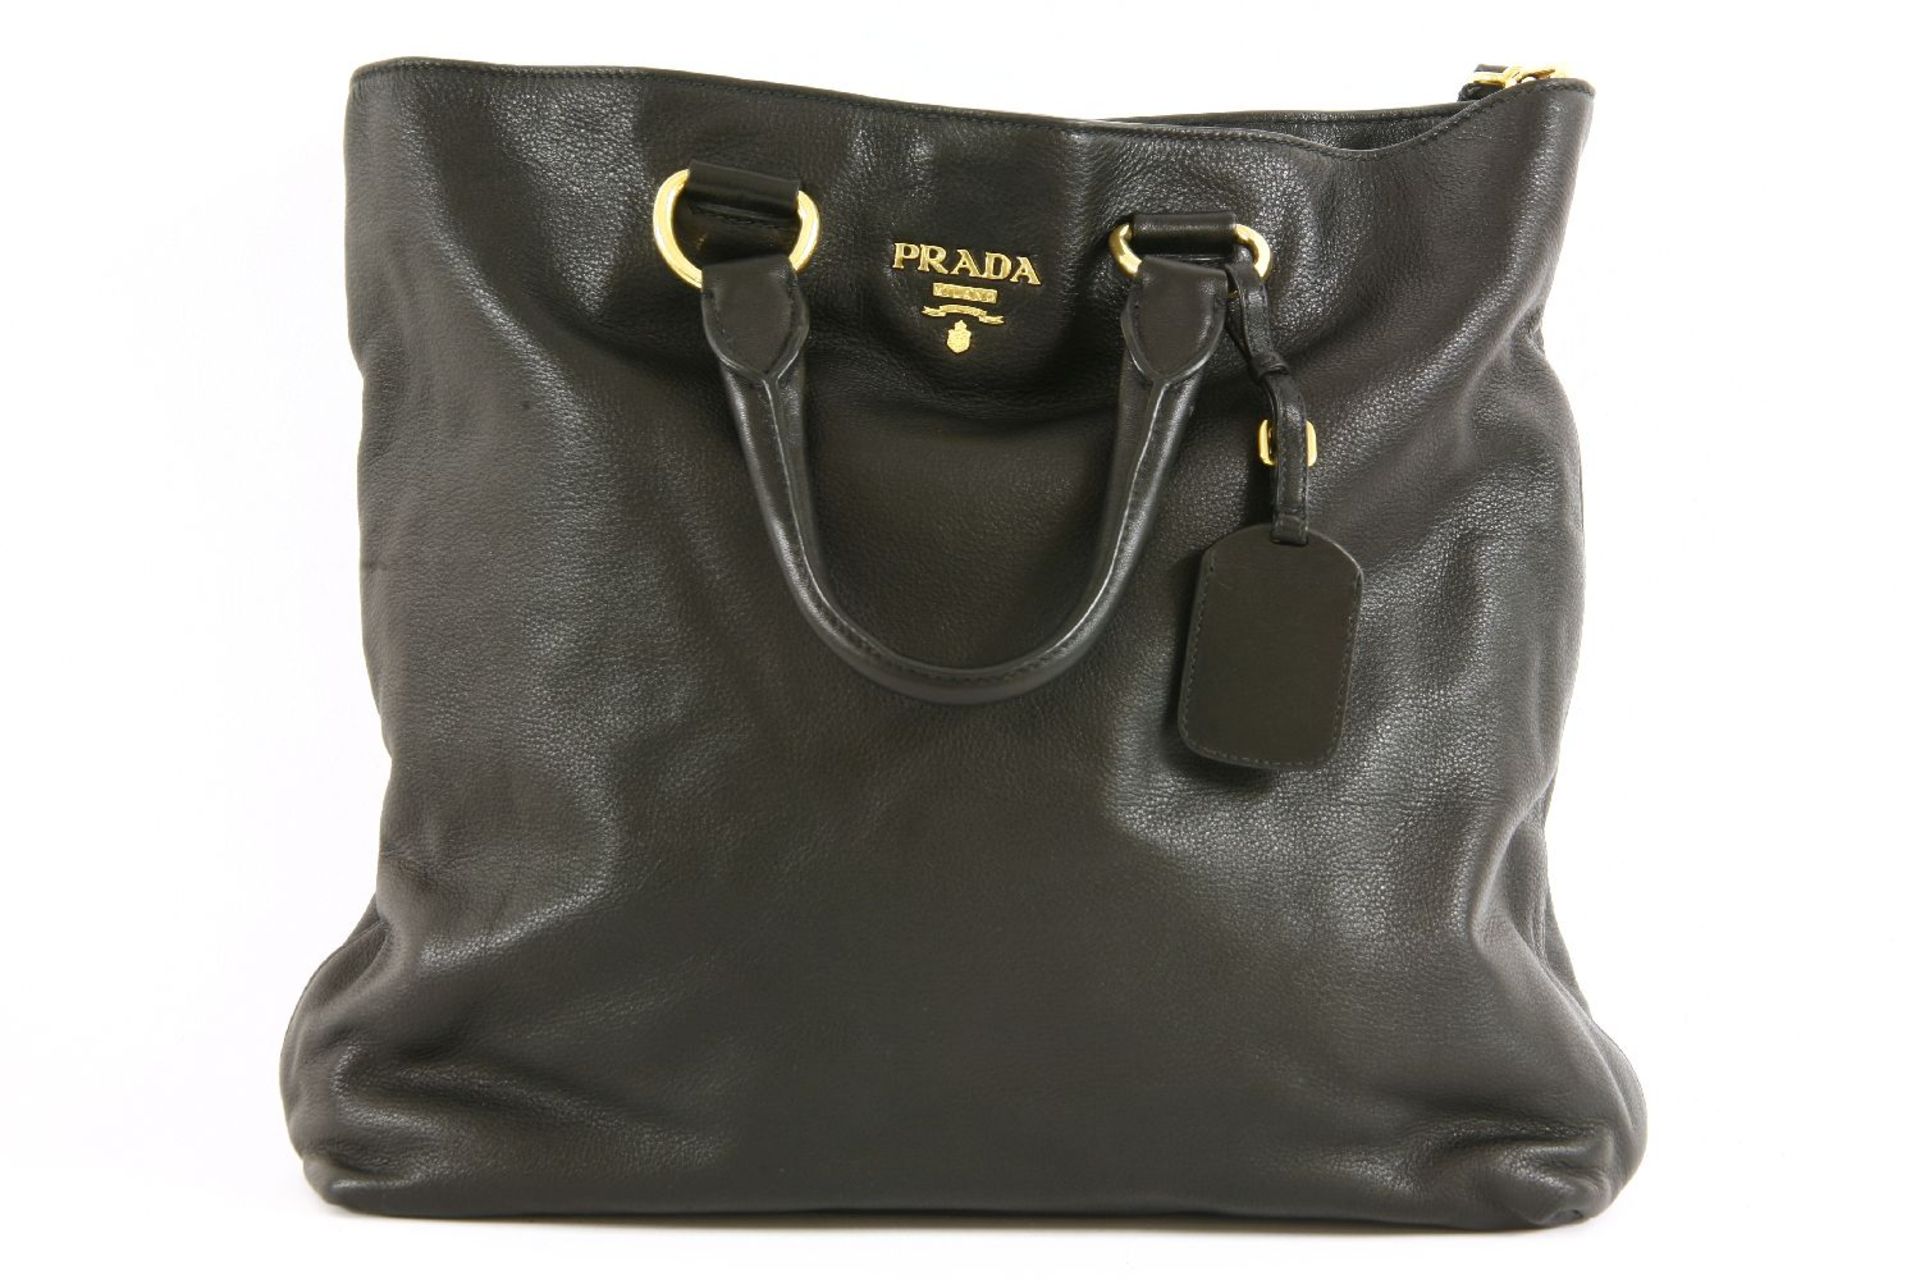 A Prada black leather handbag,featuring a black pebbled leather exterior, gold-tone hardware